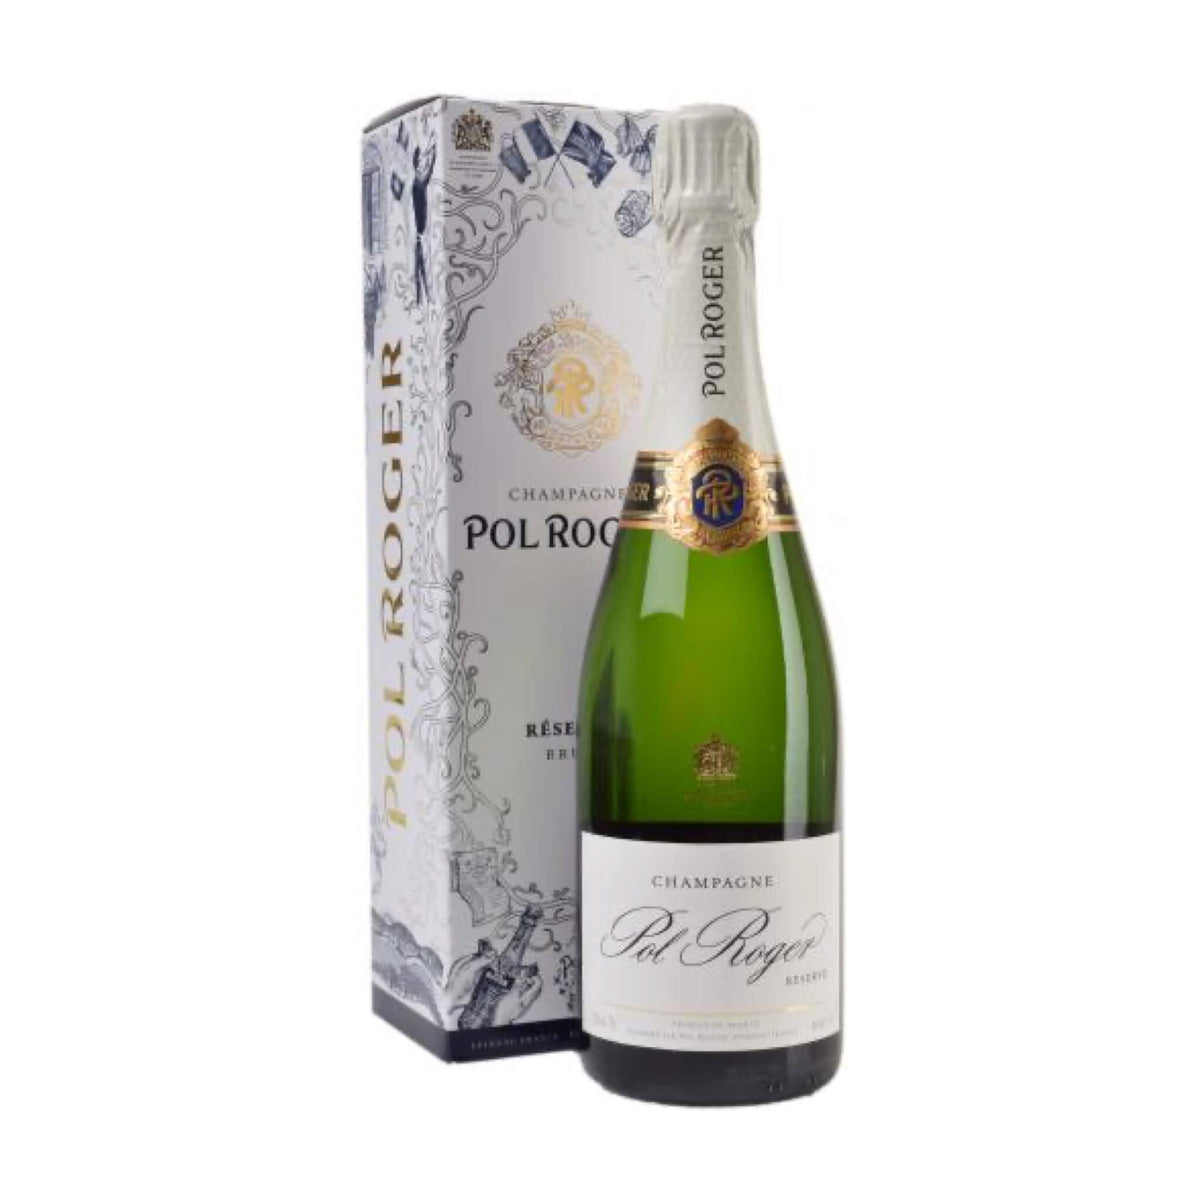 Champagne Pol Roger-Champagner-Pino Noir, Pinot Meunier, Chardonnay-Reserve Brut Champagne AOC-WINECOM